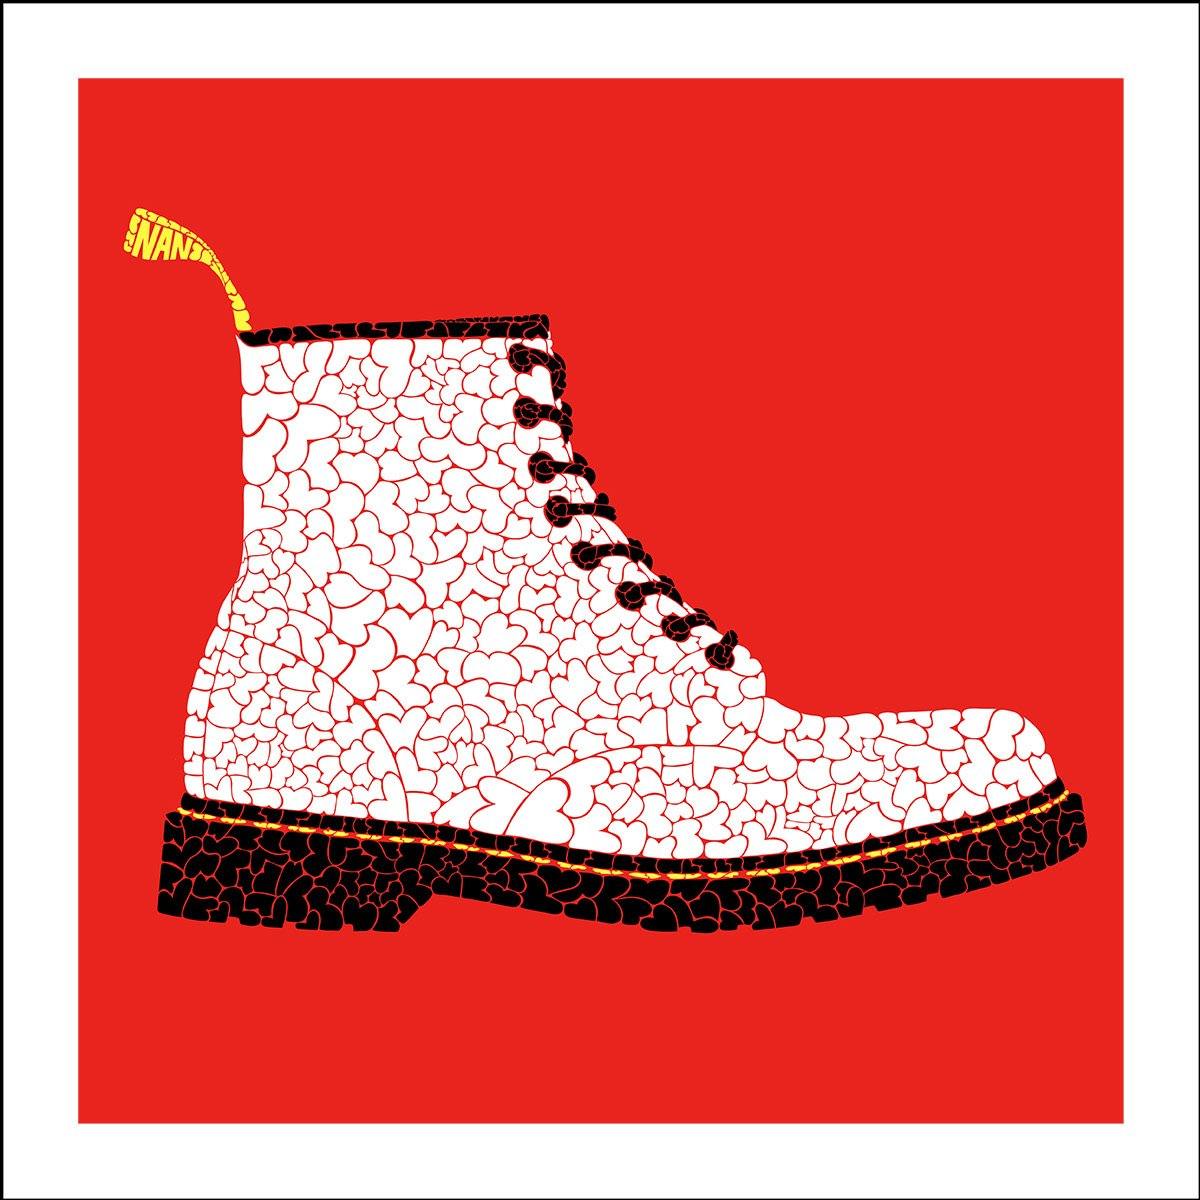 The Boot - The Art Of Nan Coffey